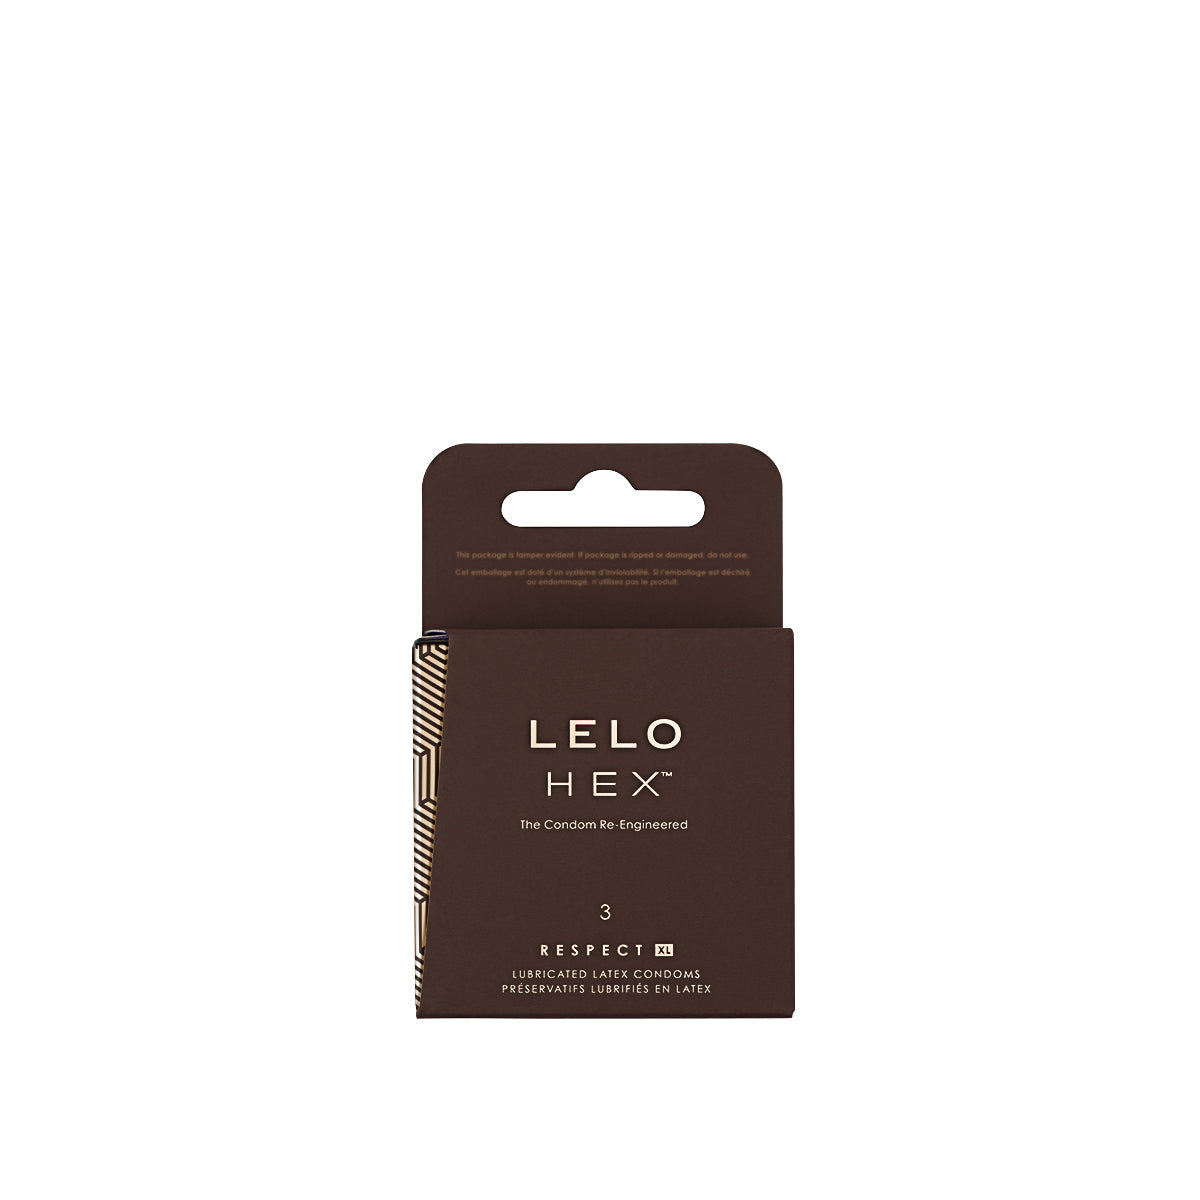 LELO HEX Respect XL Condoms, 3 Pack